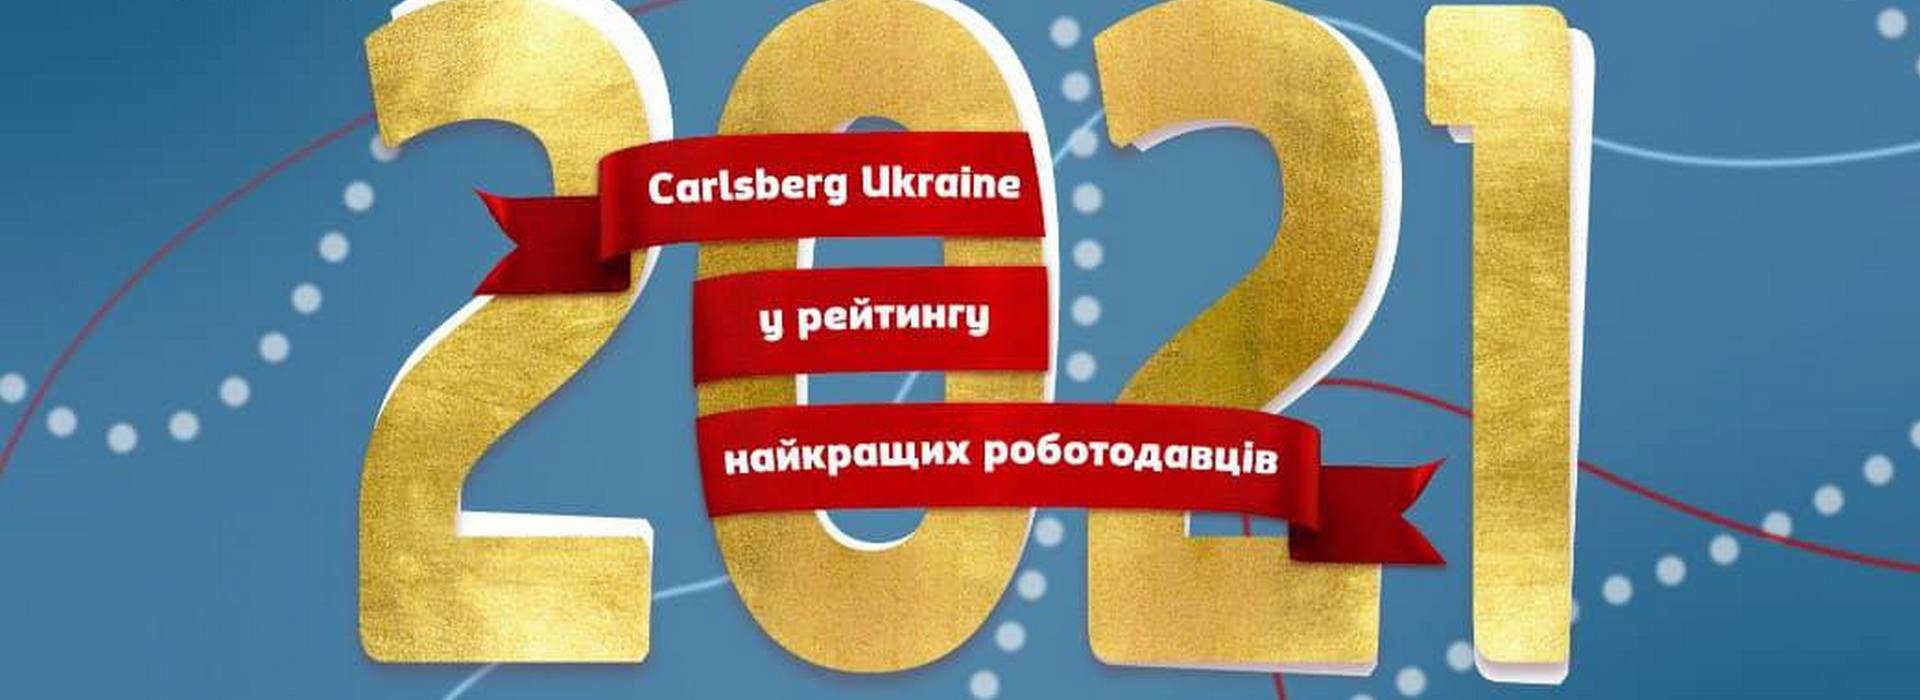 Carlsberg Ukraine Was Included in the Ranking of the Best Employers in Ukraine in 2021